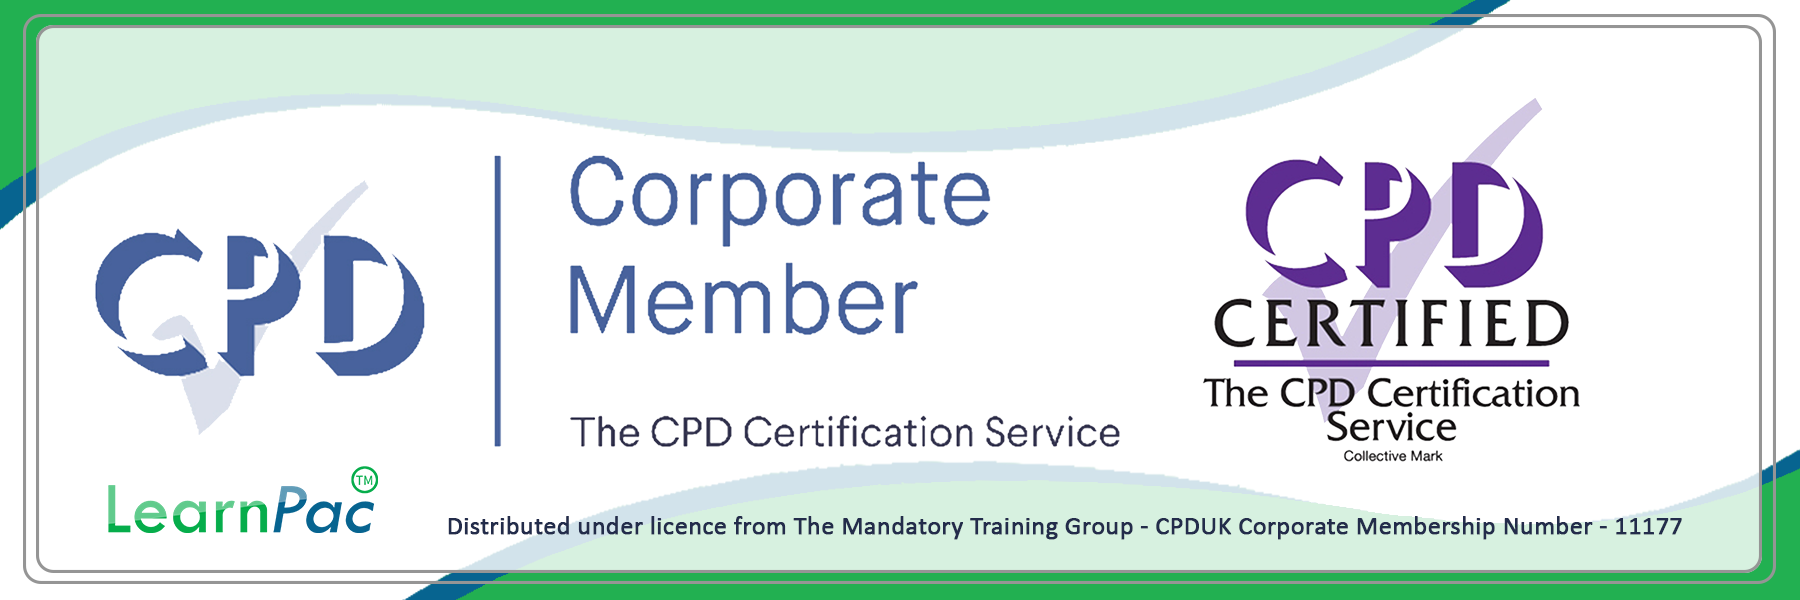 Care Certificate Standard 12 - CPDUK Certified - Learnpac System UK - 